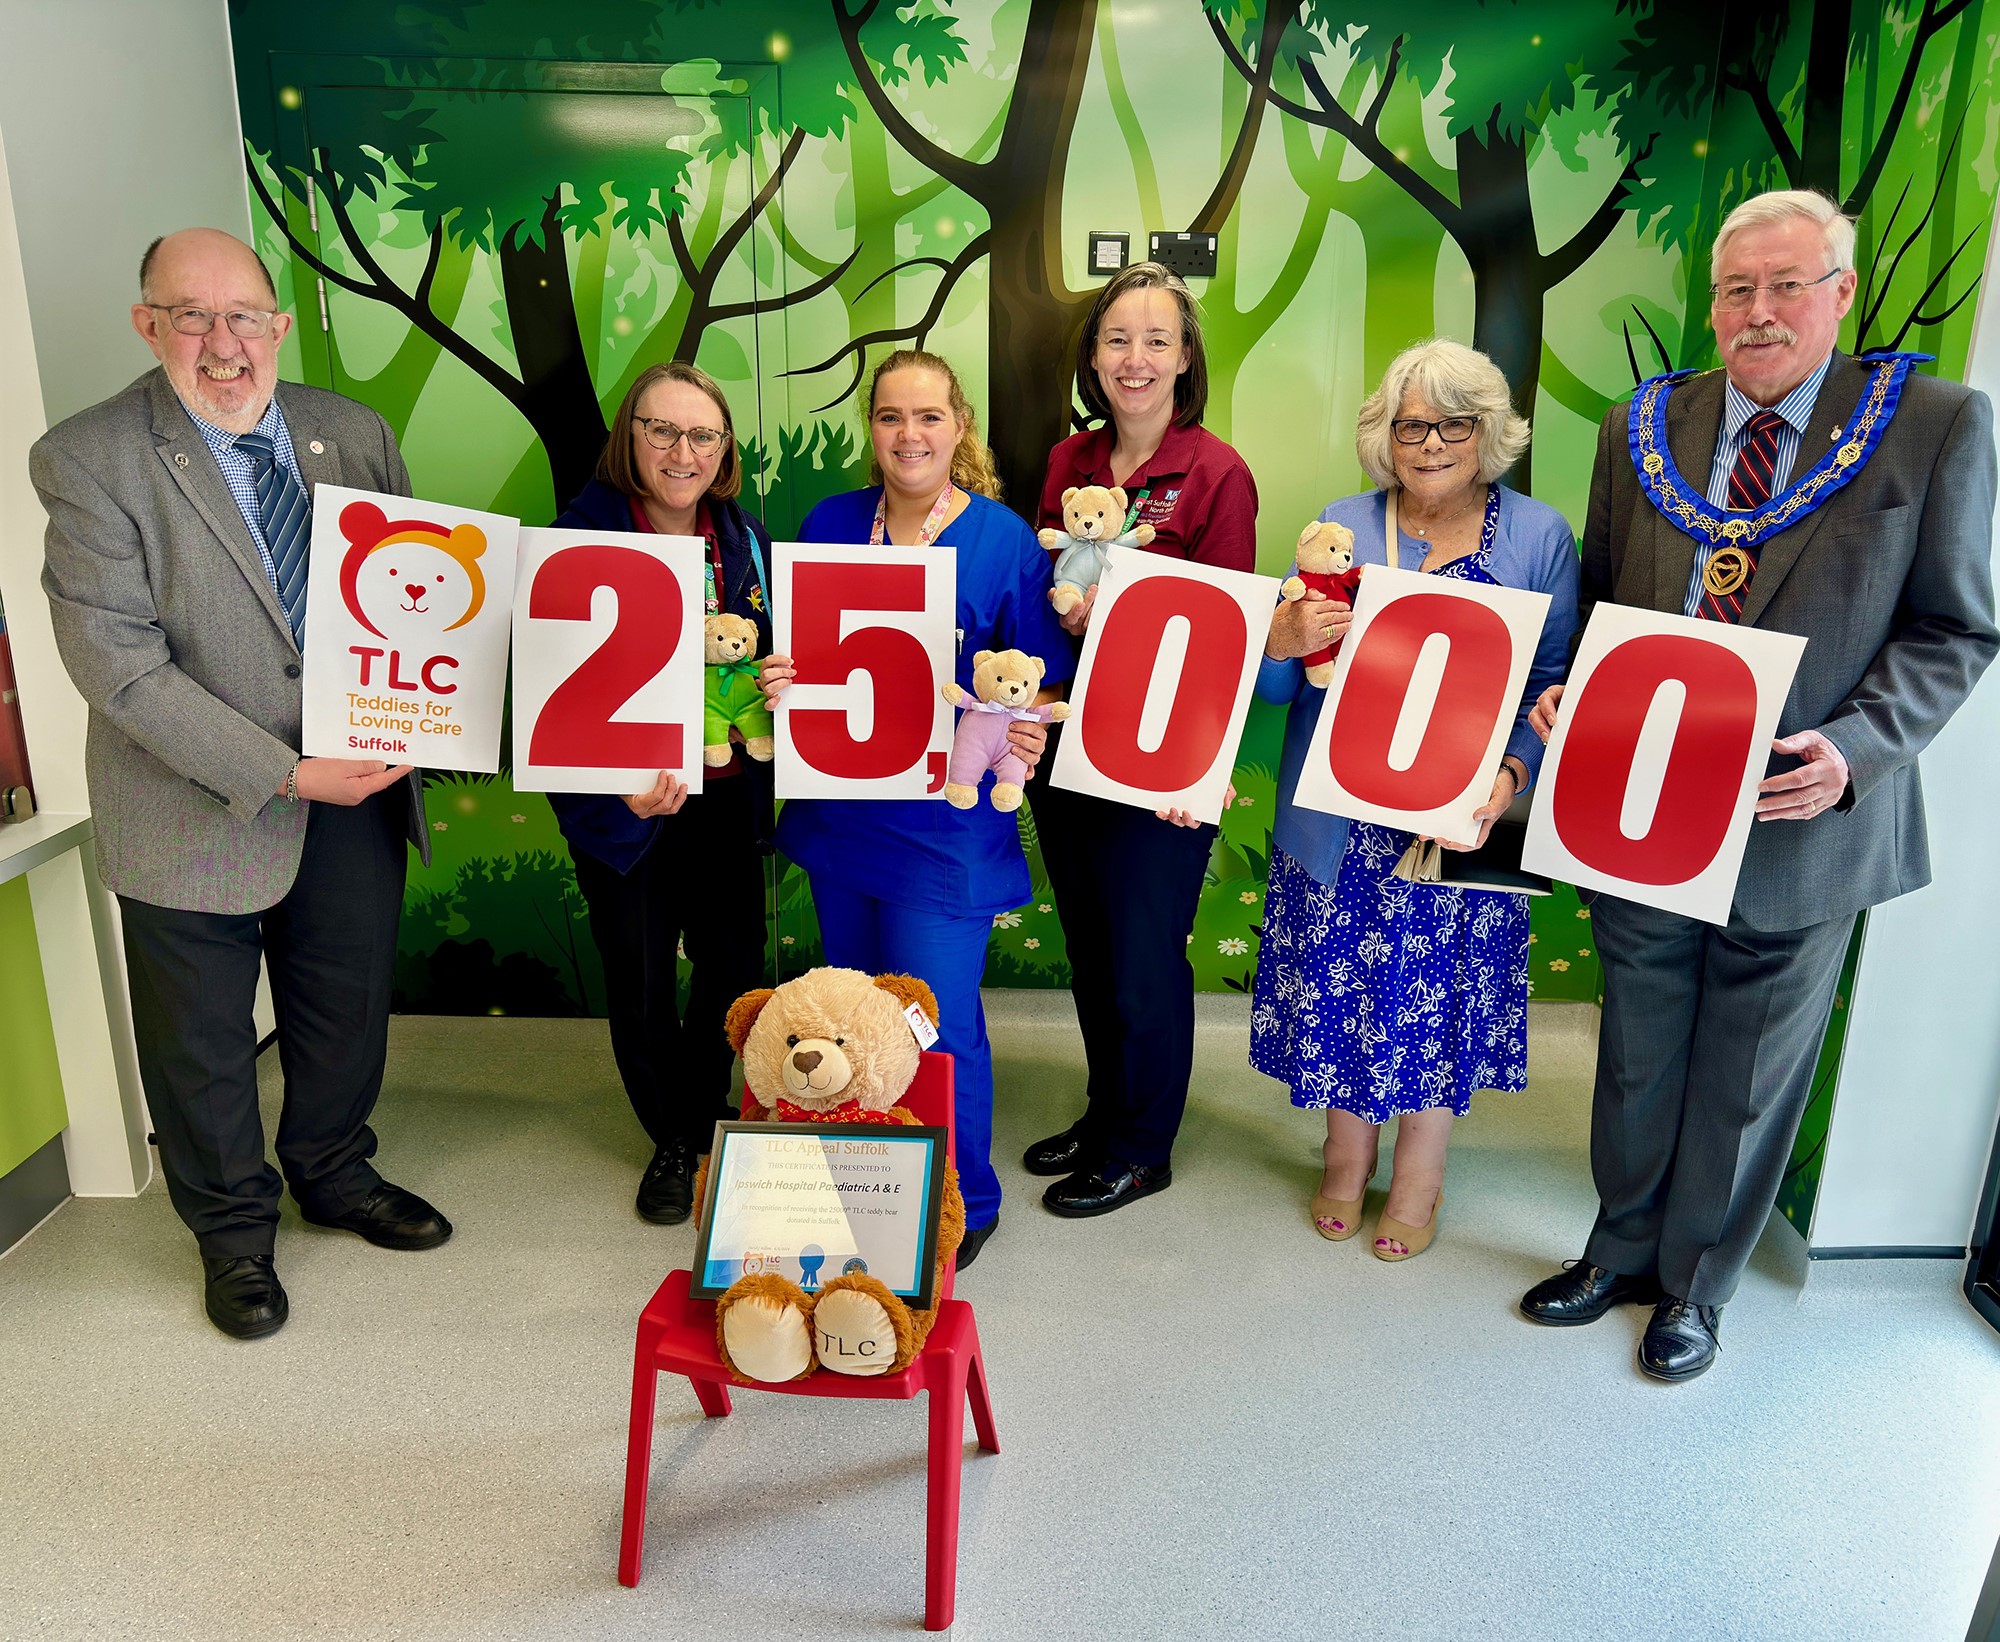 Suffolk Freemasons have presented their 25,000th Teddy Bear to Ipswich Hospital.